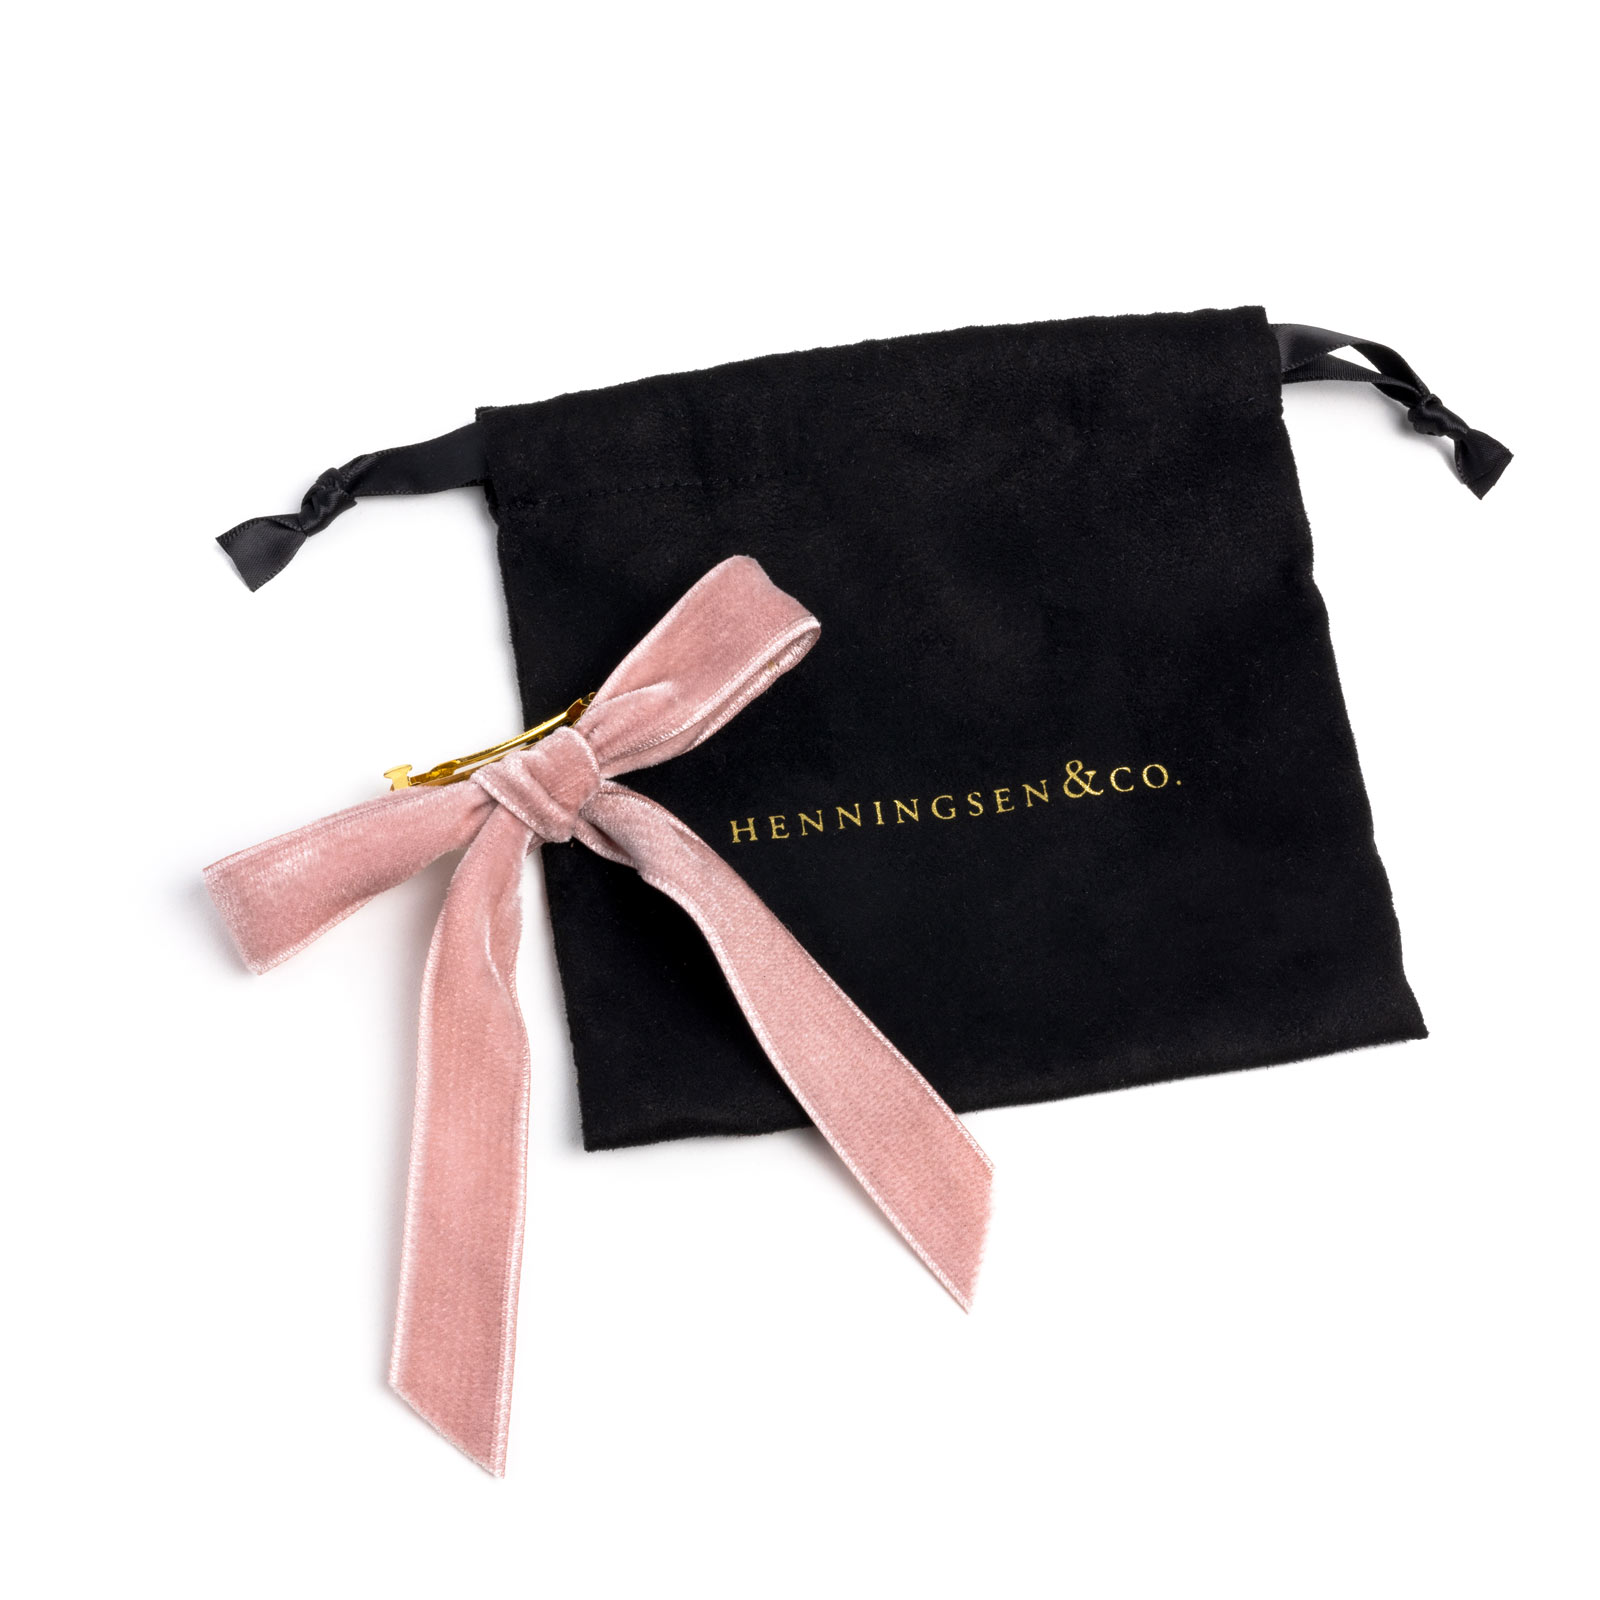 Henningsen & Co. Leonor Greyl Blush Bardot Bow and pouch